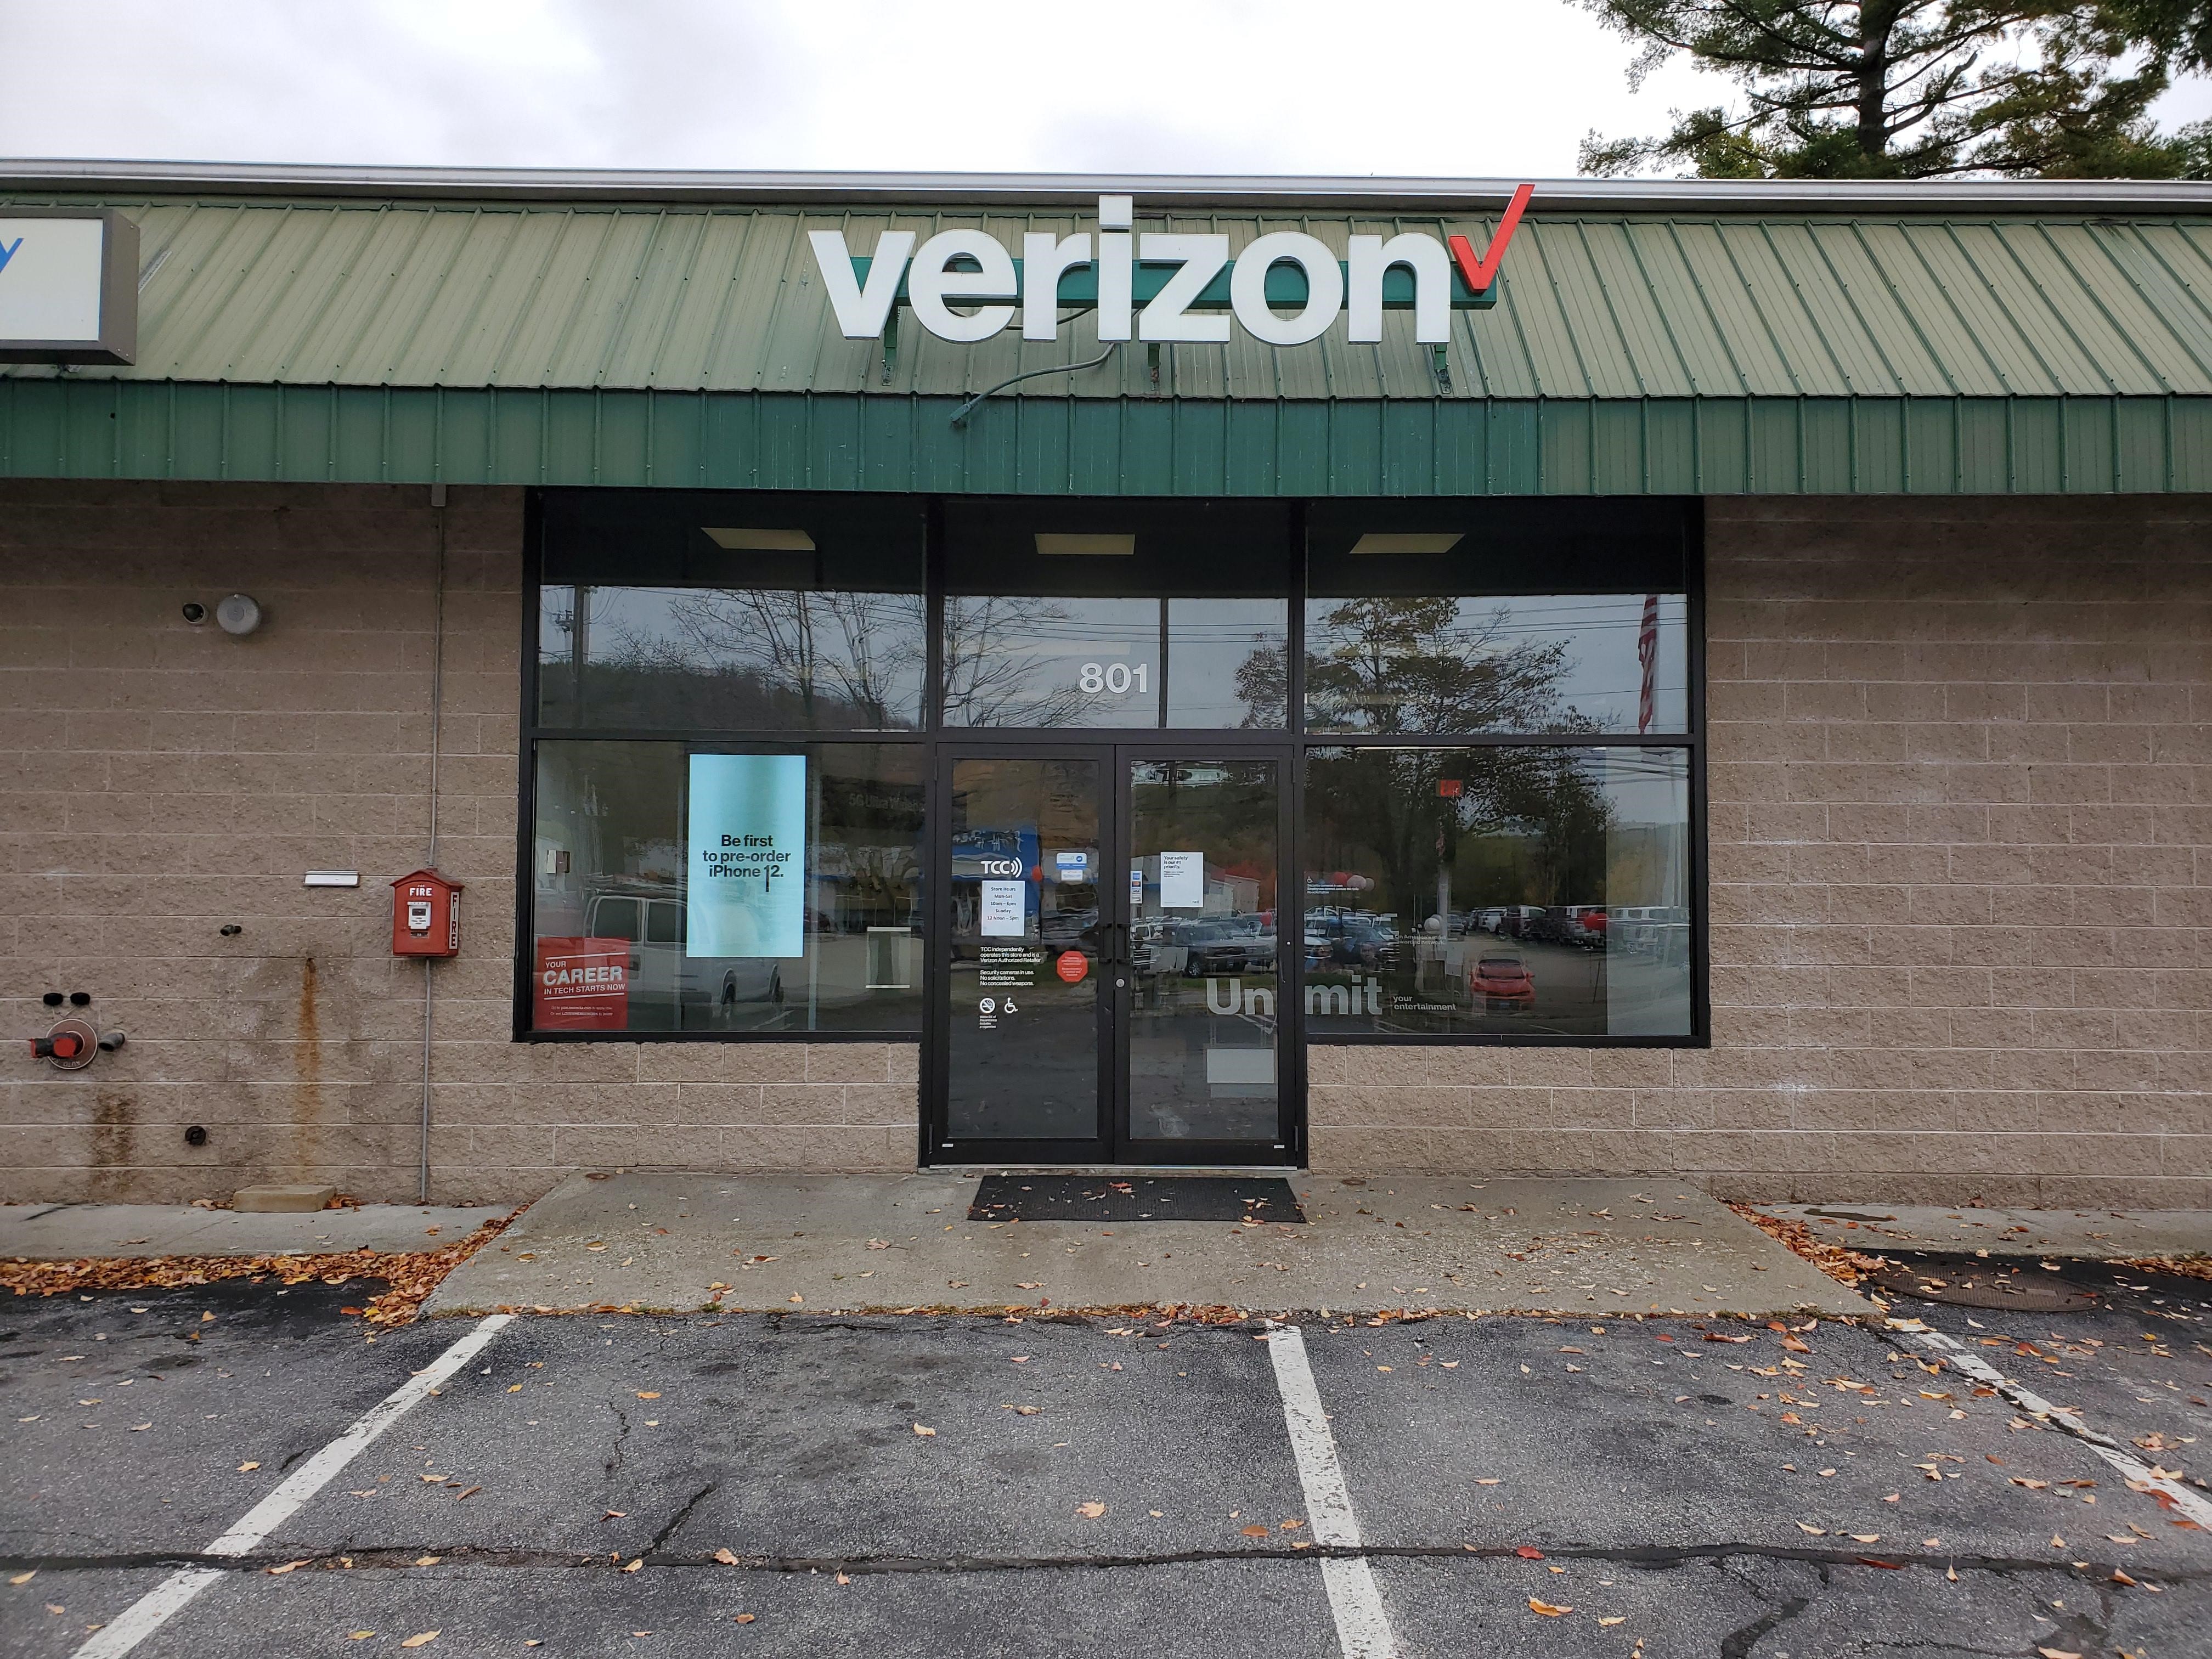 TCC, Verizon Authorized Retailer
801 Putney Road
Brattleboro, VT